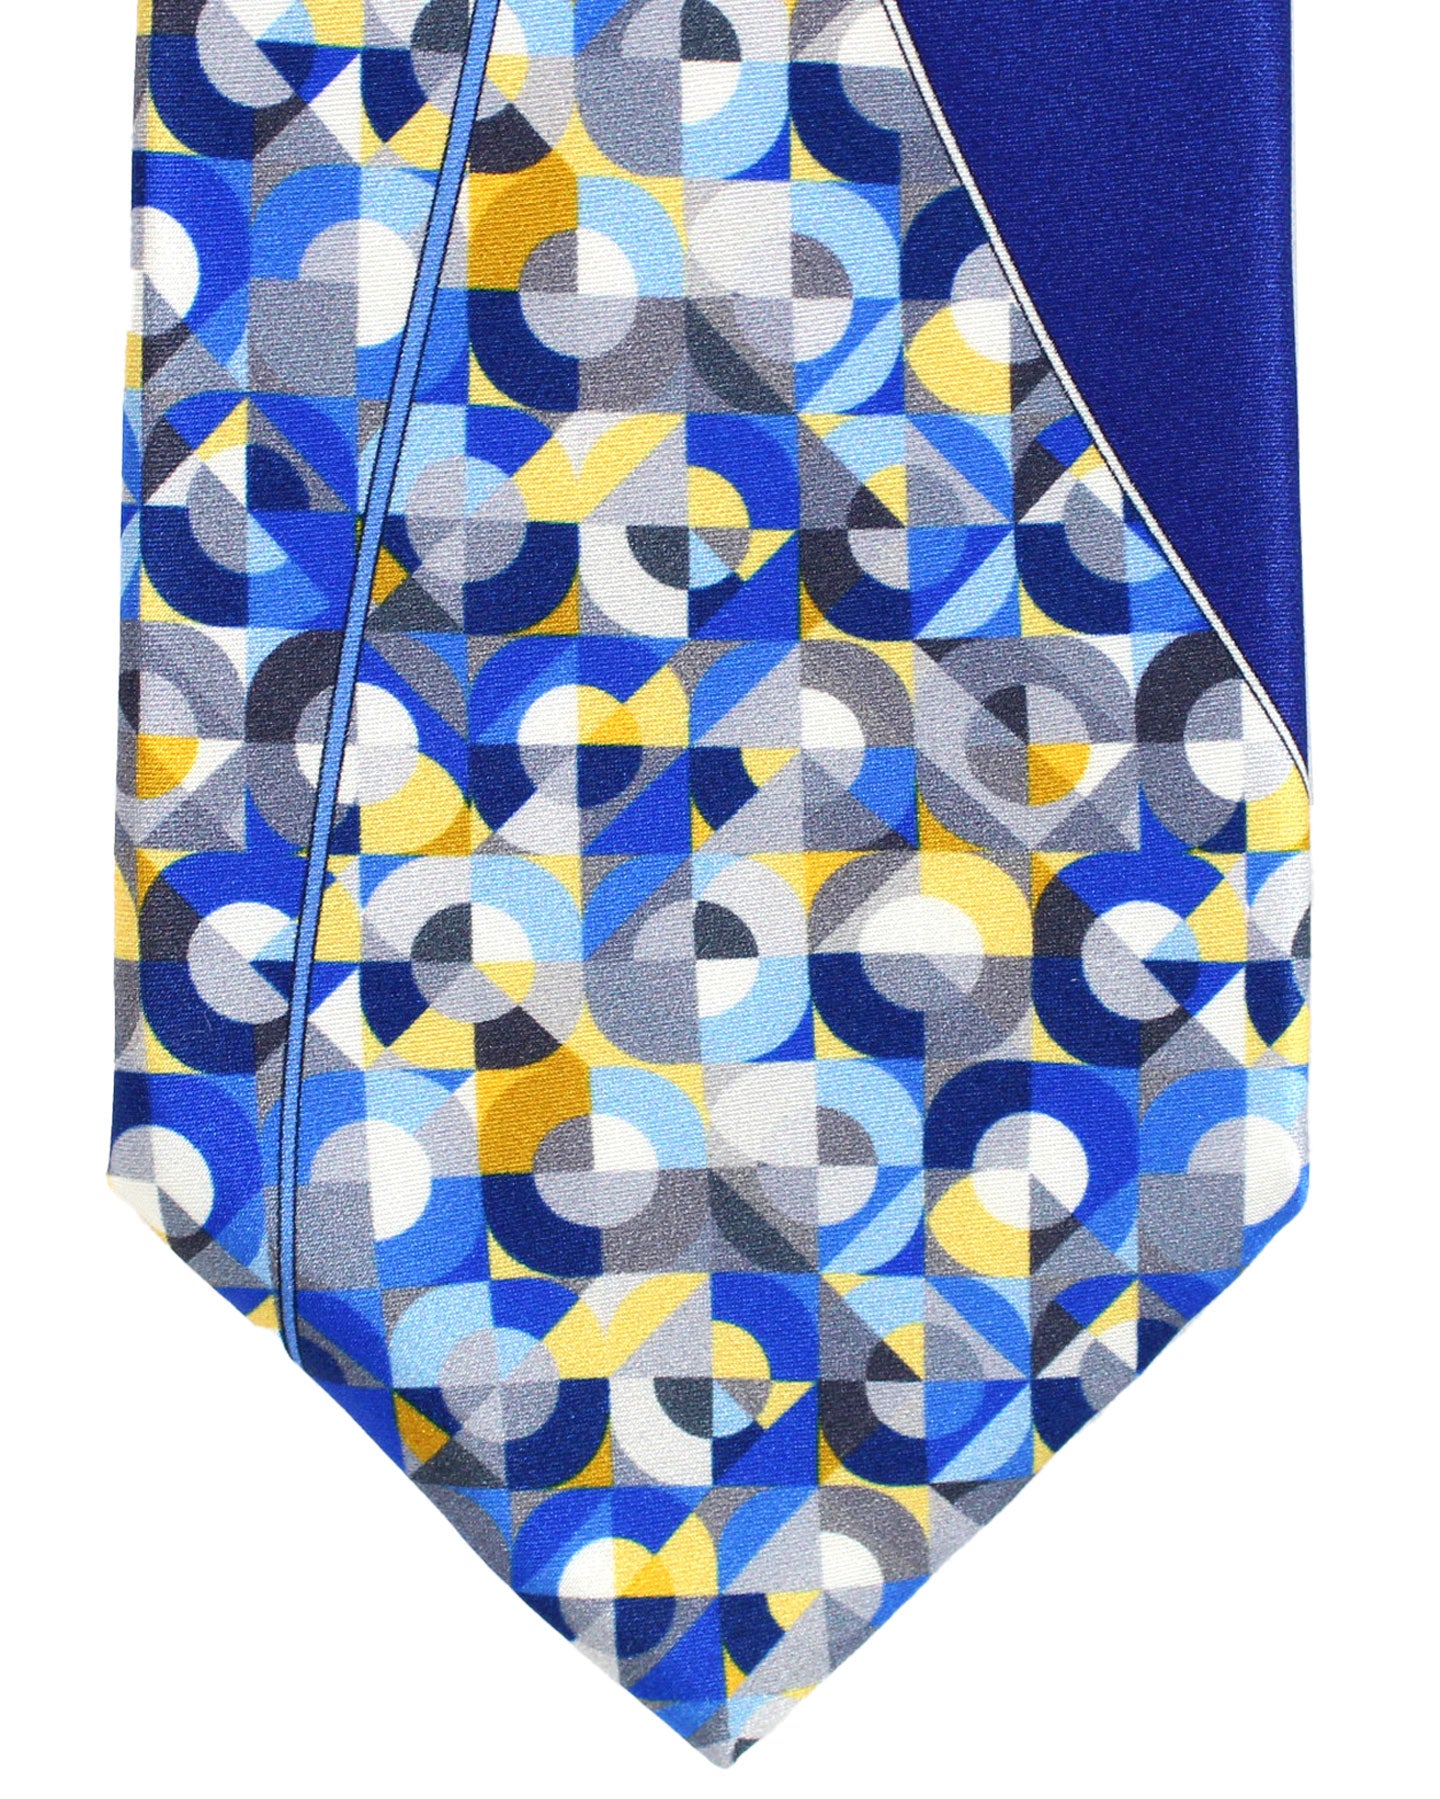 Vitaliano Pancaldi Silk Tie Royal Blue Blue Geometric Swirl Design